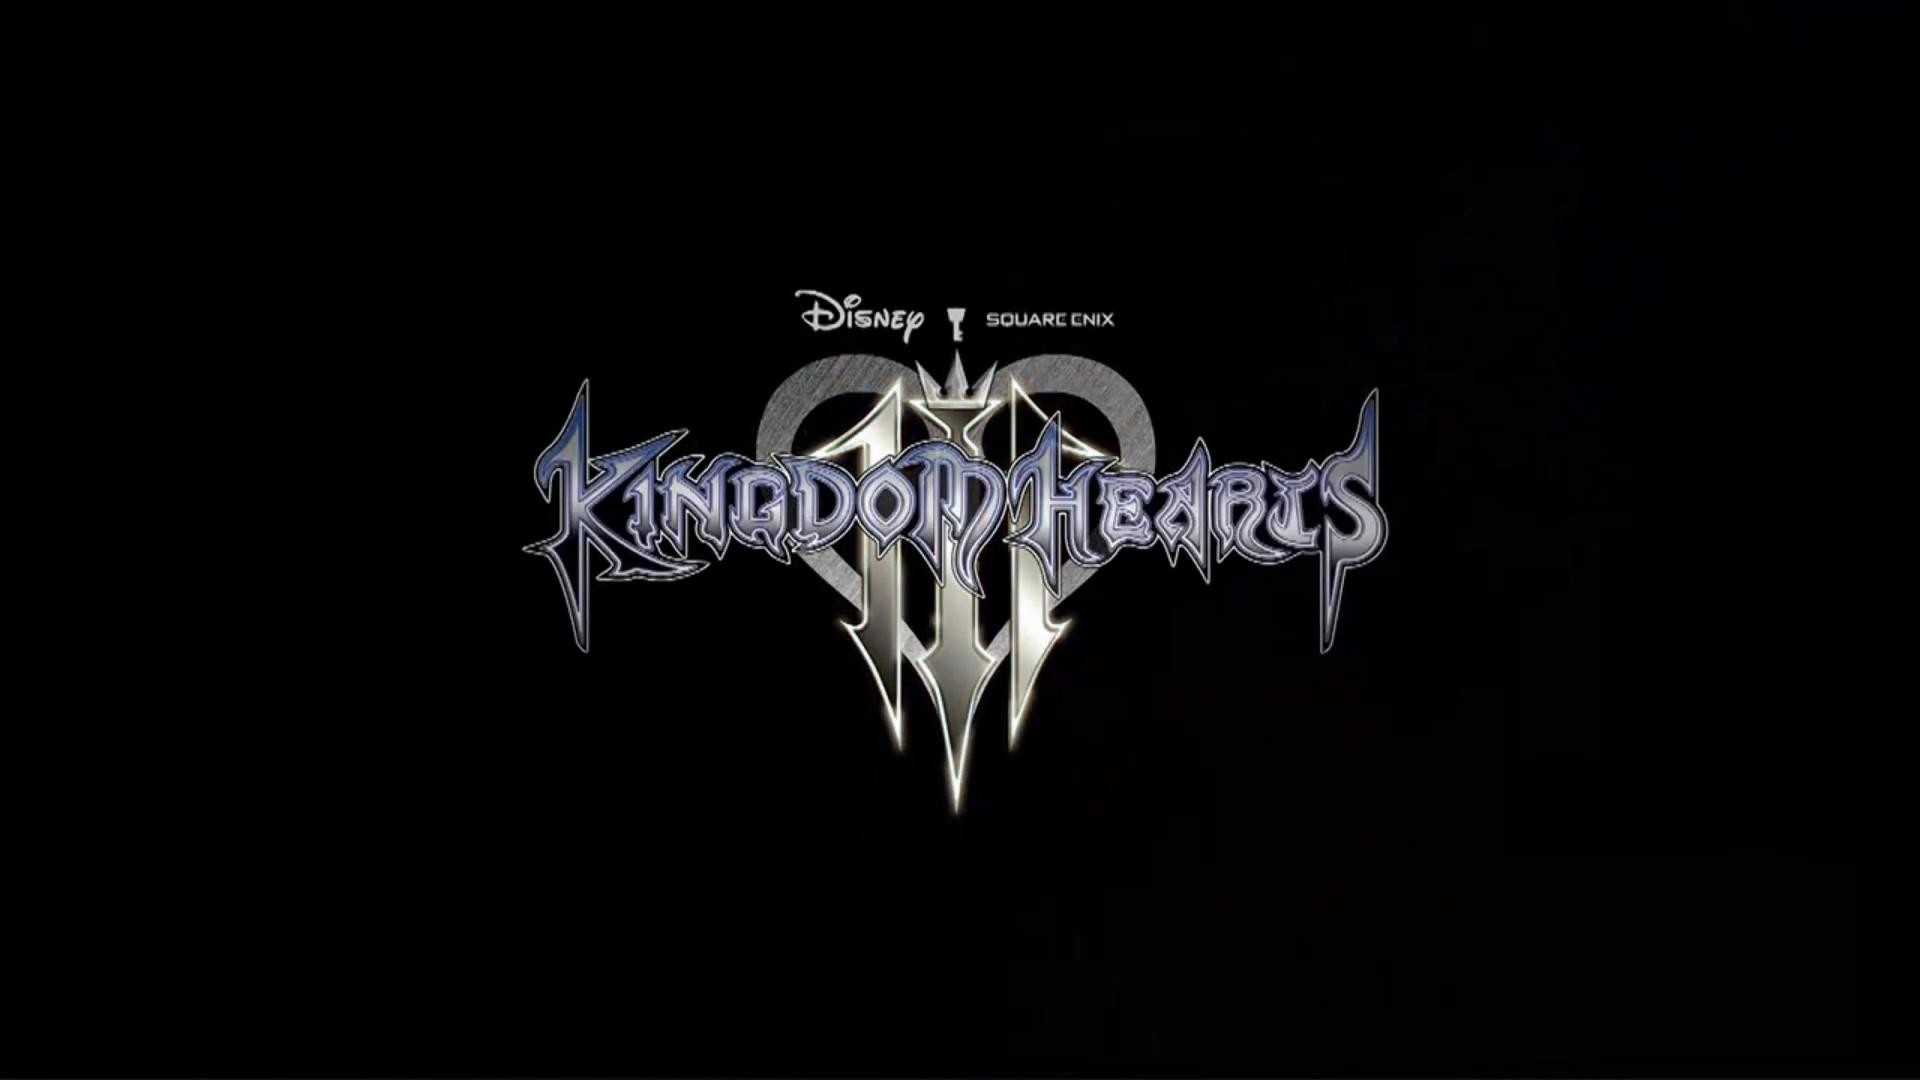 Kingdom Hearts Wallpaper Image